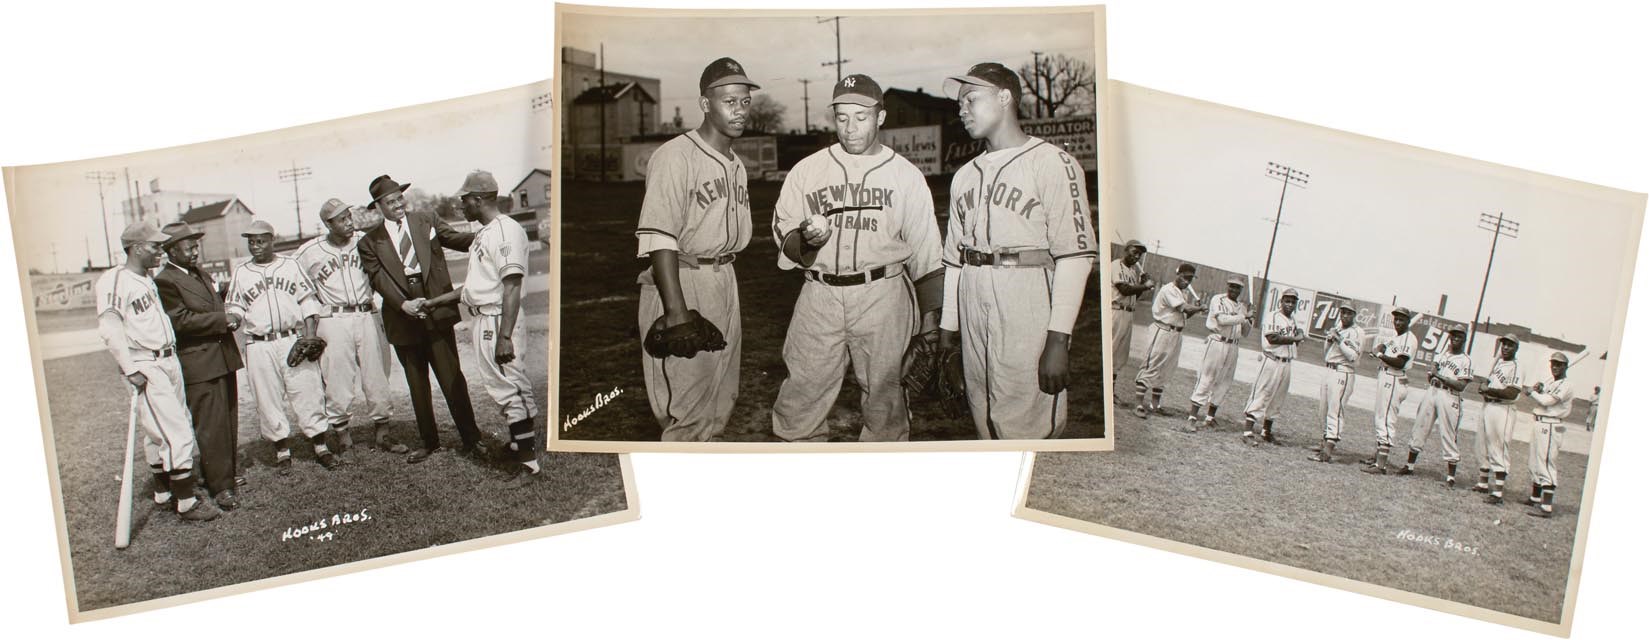 Negro League, Latin, Japanese & International Base - 1940s Negro League Photographs by the Hooks Brothers (3)